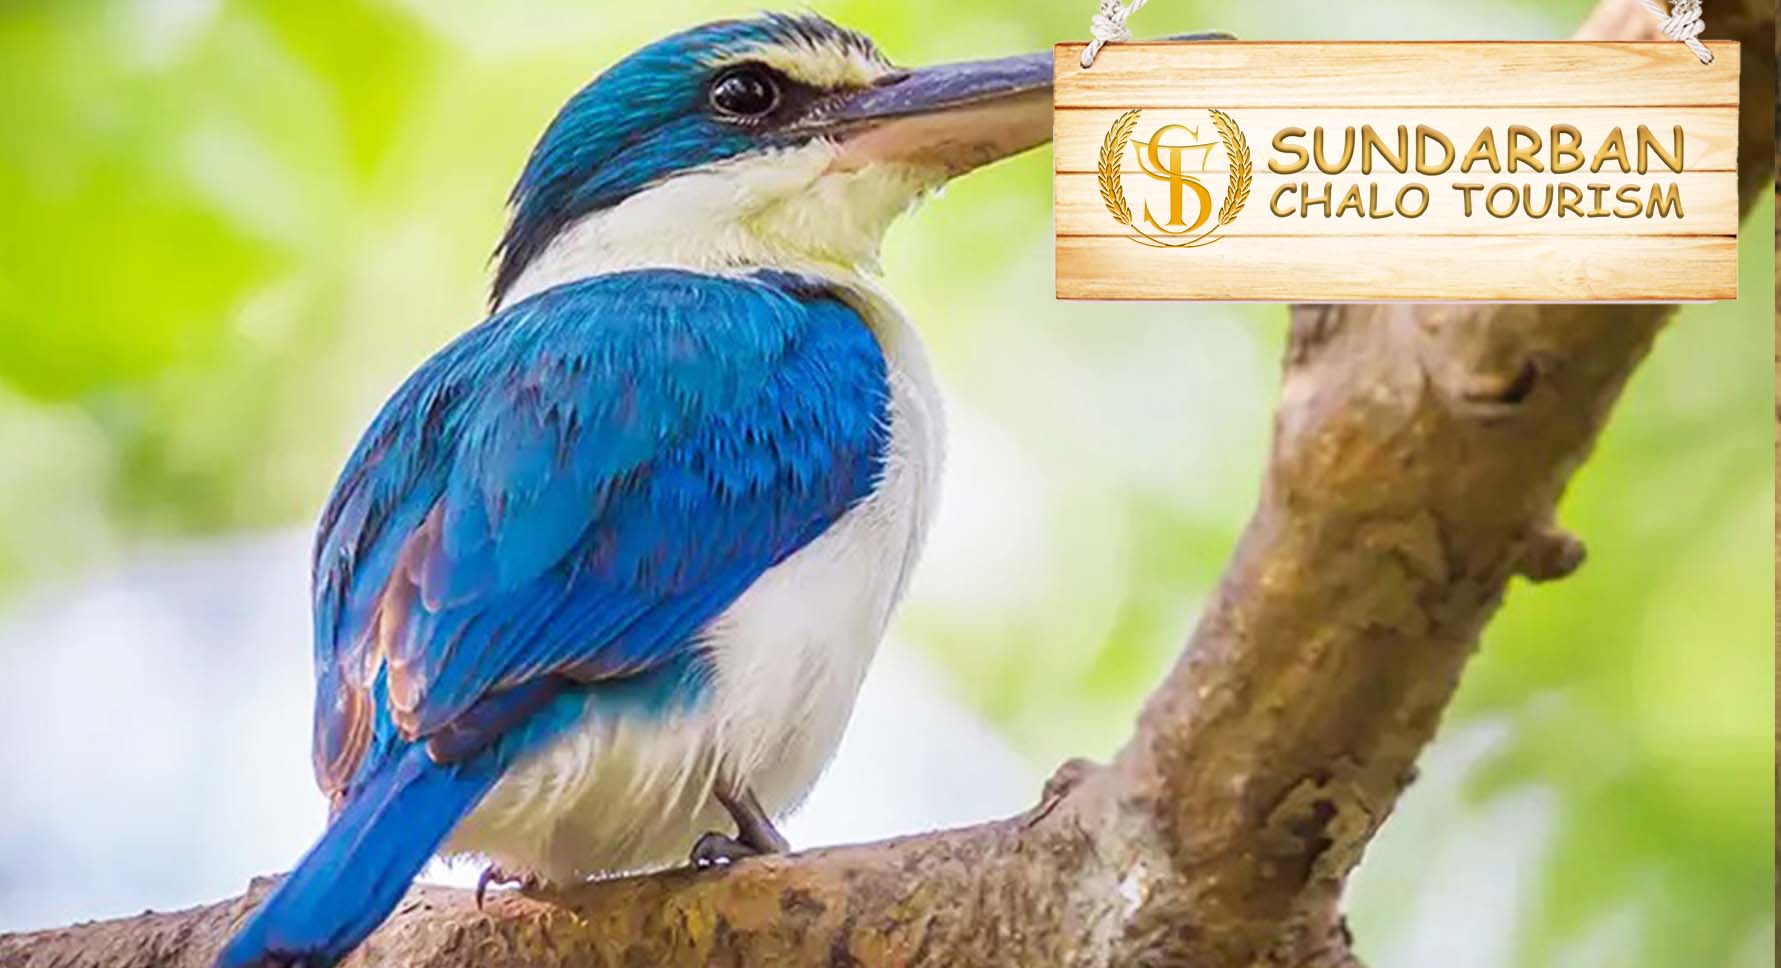 THE 10 CLOSEST Hotels to Sundarban Chalo - Unique Jungle Tour